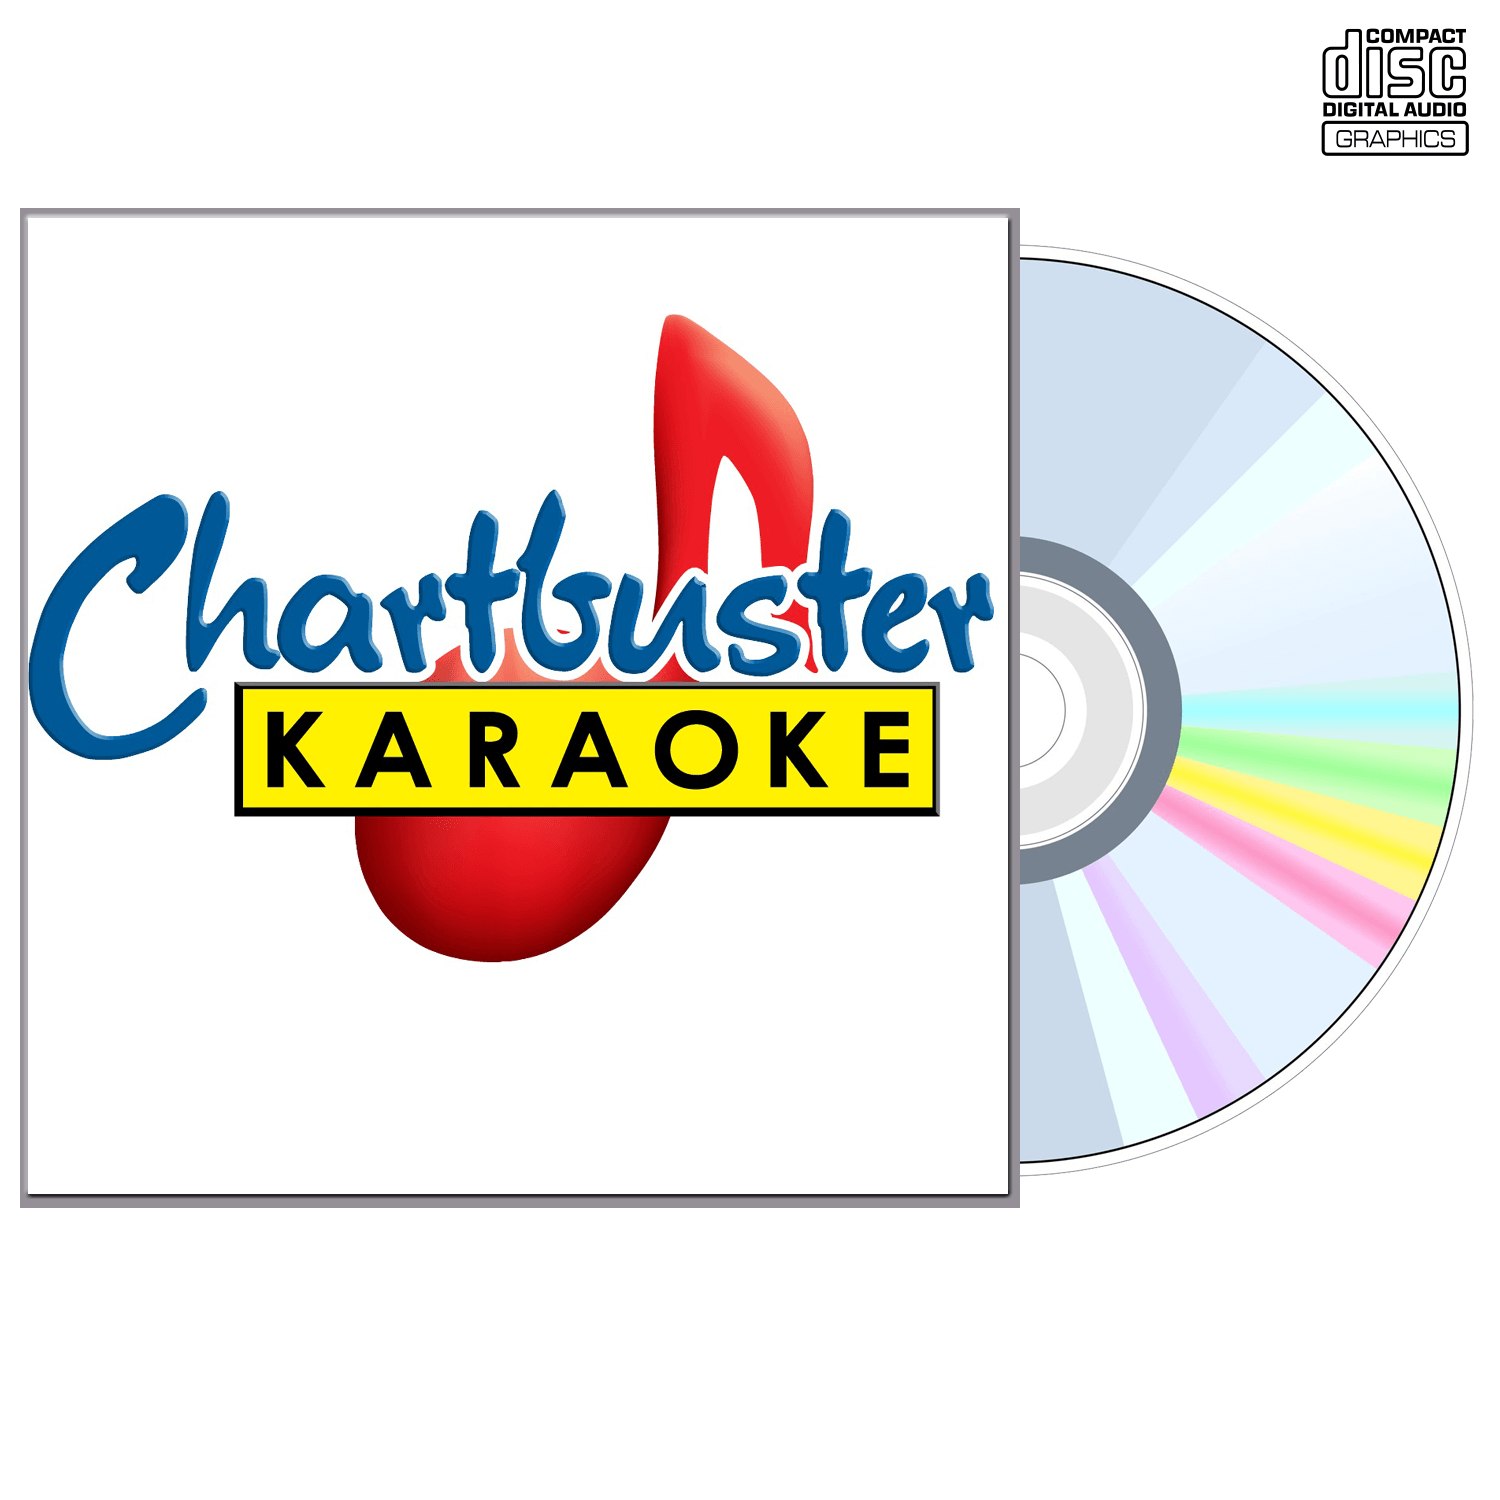 70's Collection Vol 06 - CD+G - Chartbuster Karaoke - Karaoke Home Entertainment